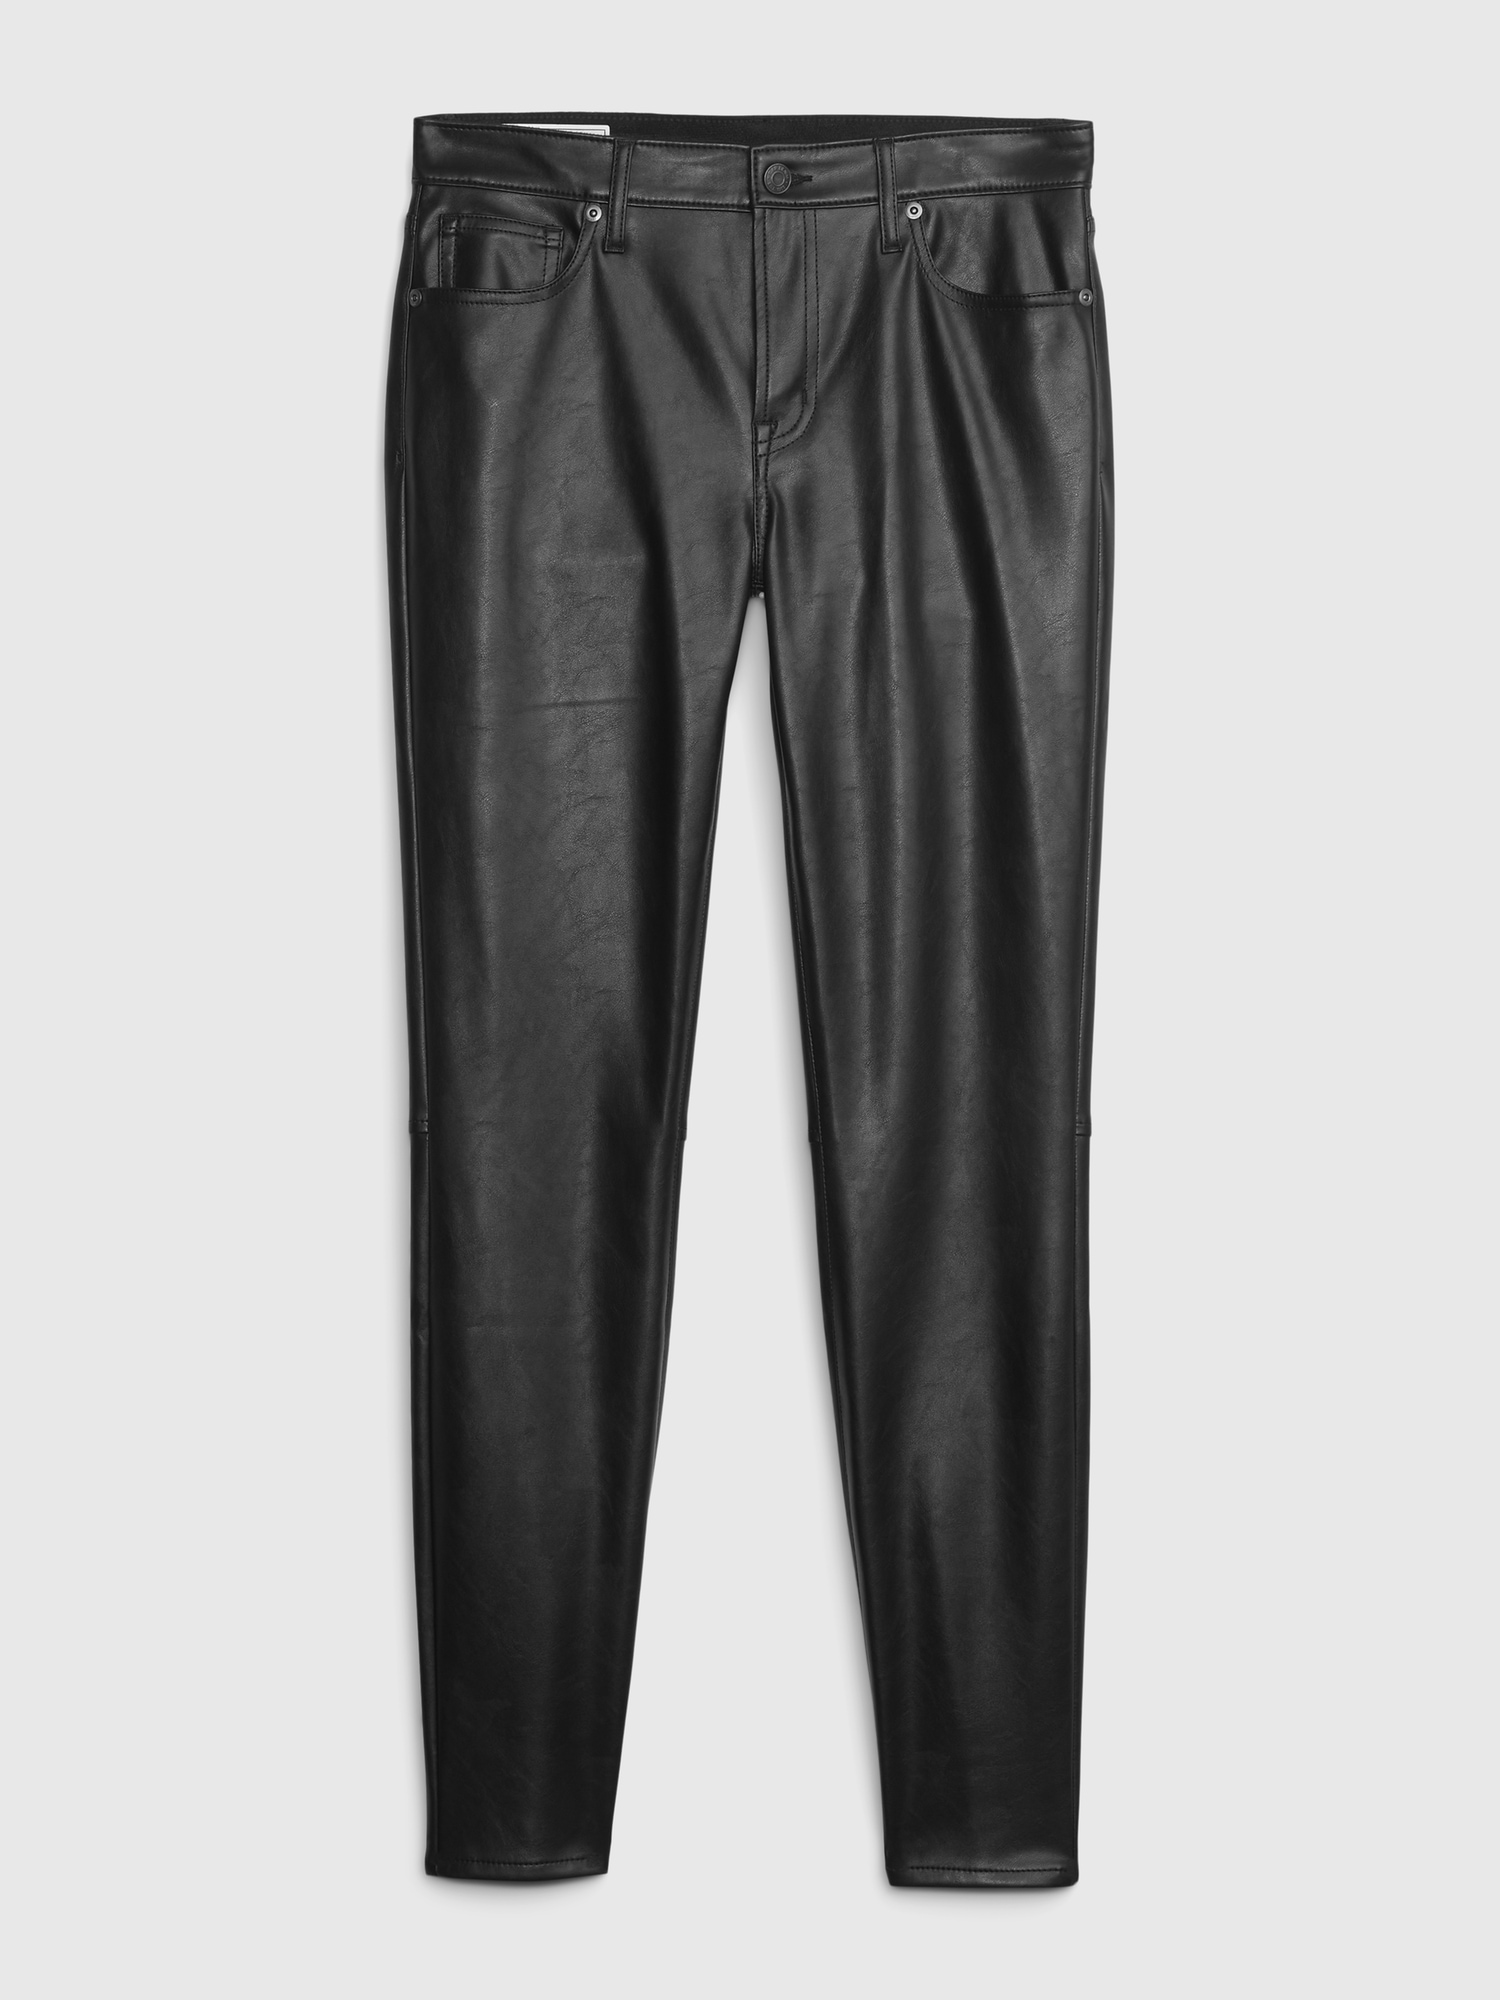 Ellos Women's Plus Size Skinny Leather Pants, 28 - Black : Target